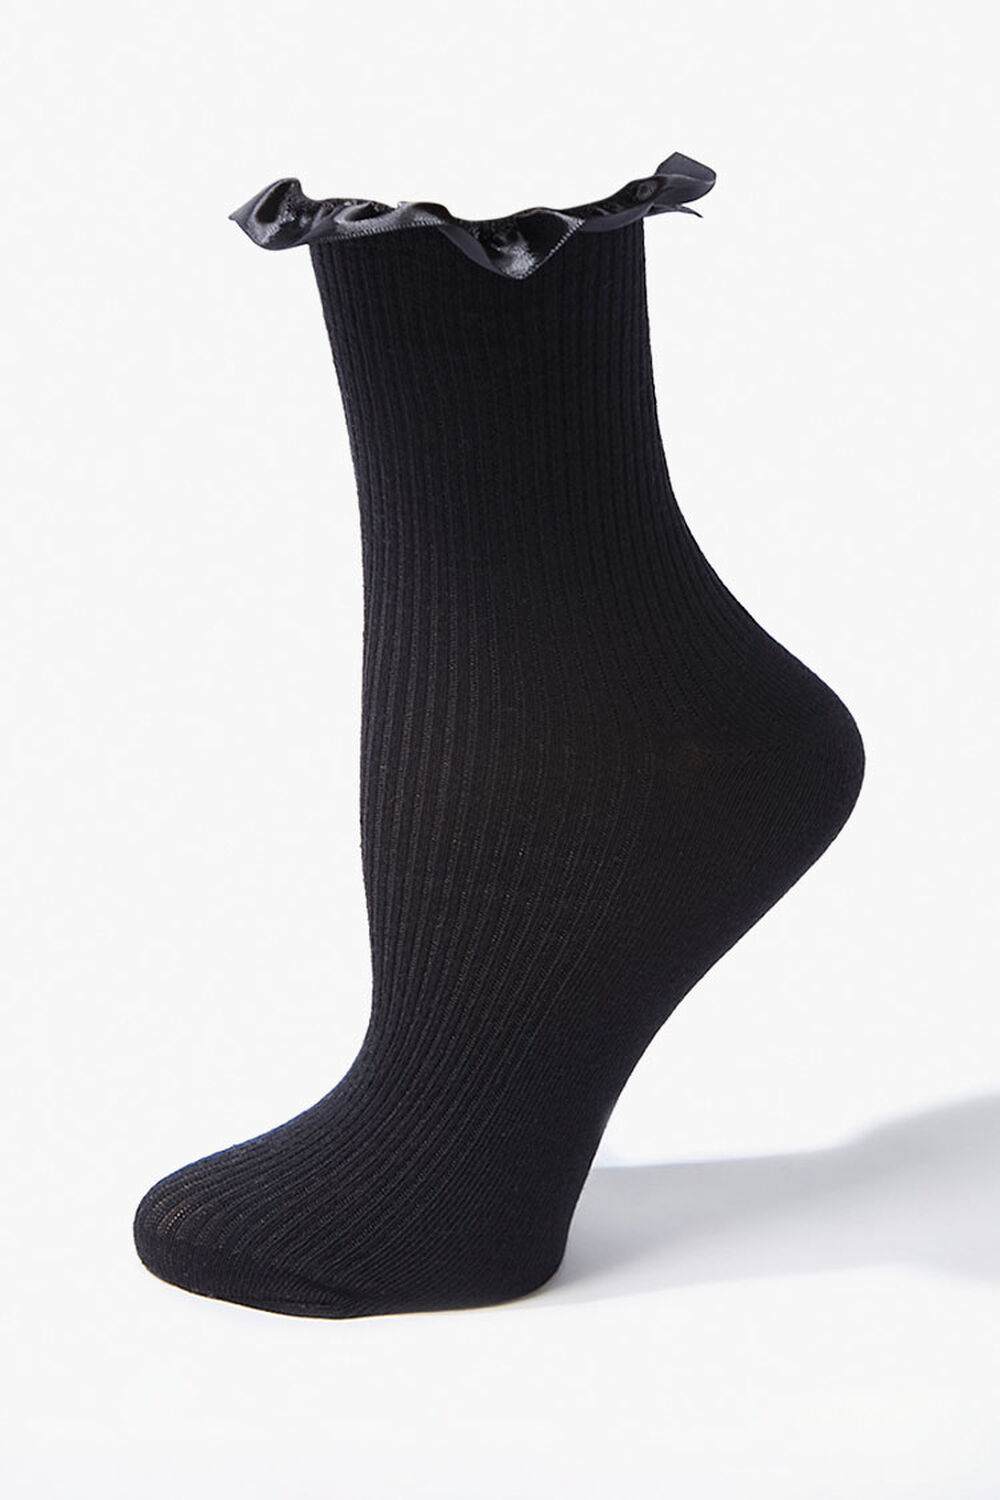 BLACK Ruffle-Trim Crew Socks, image 1